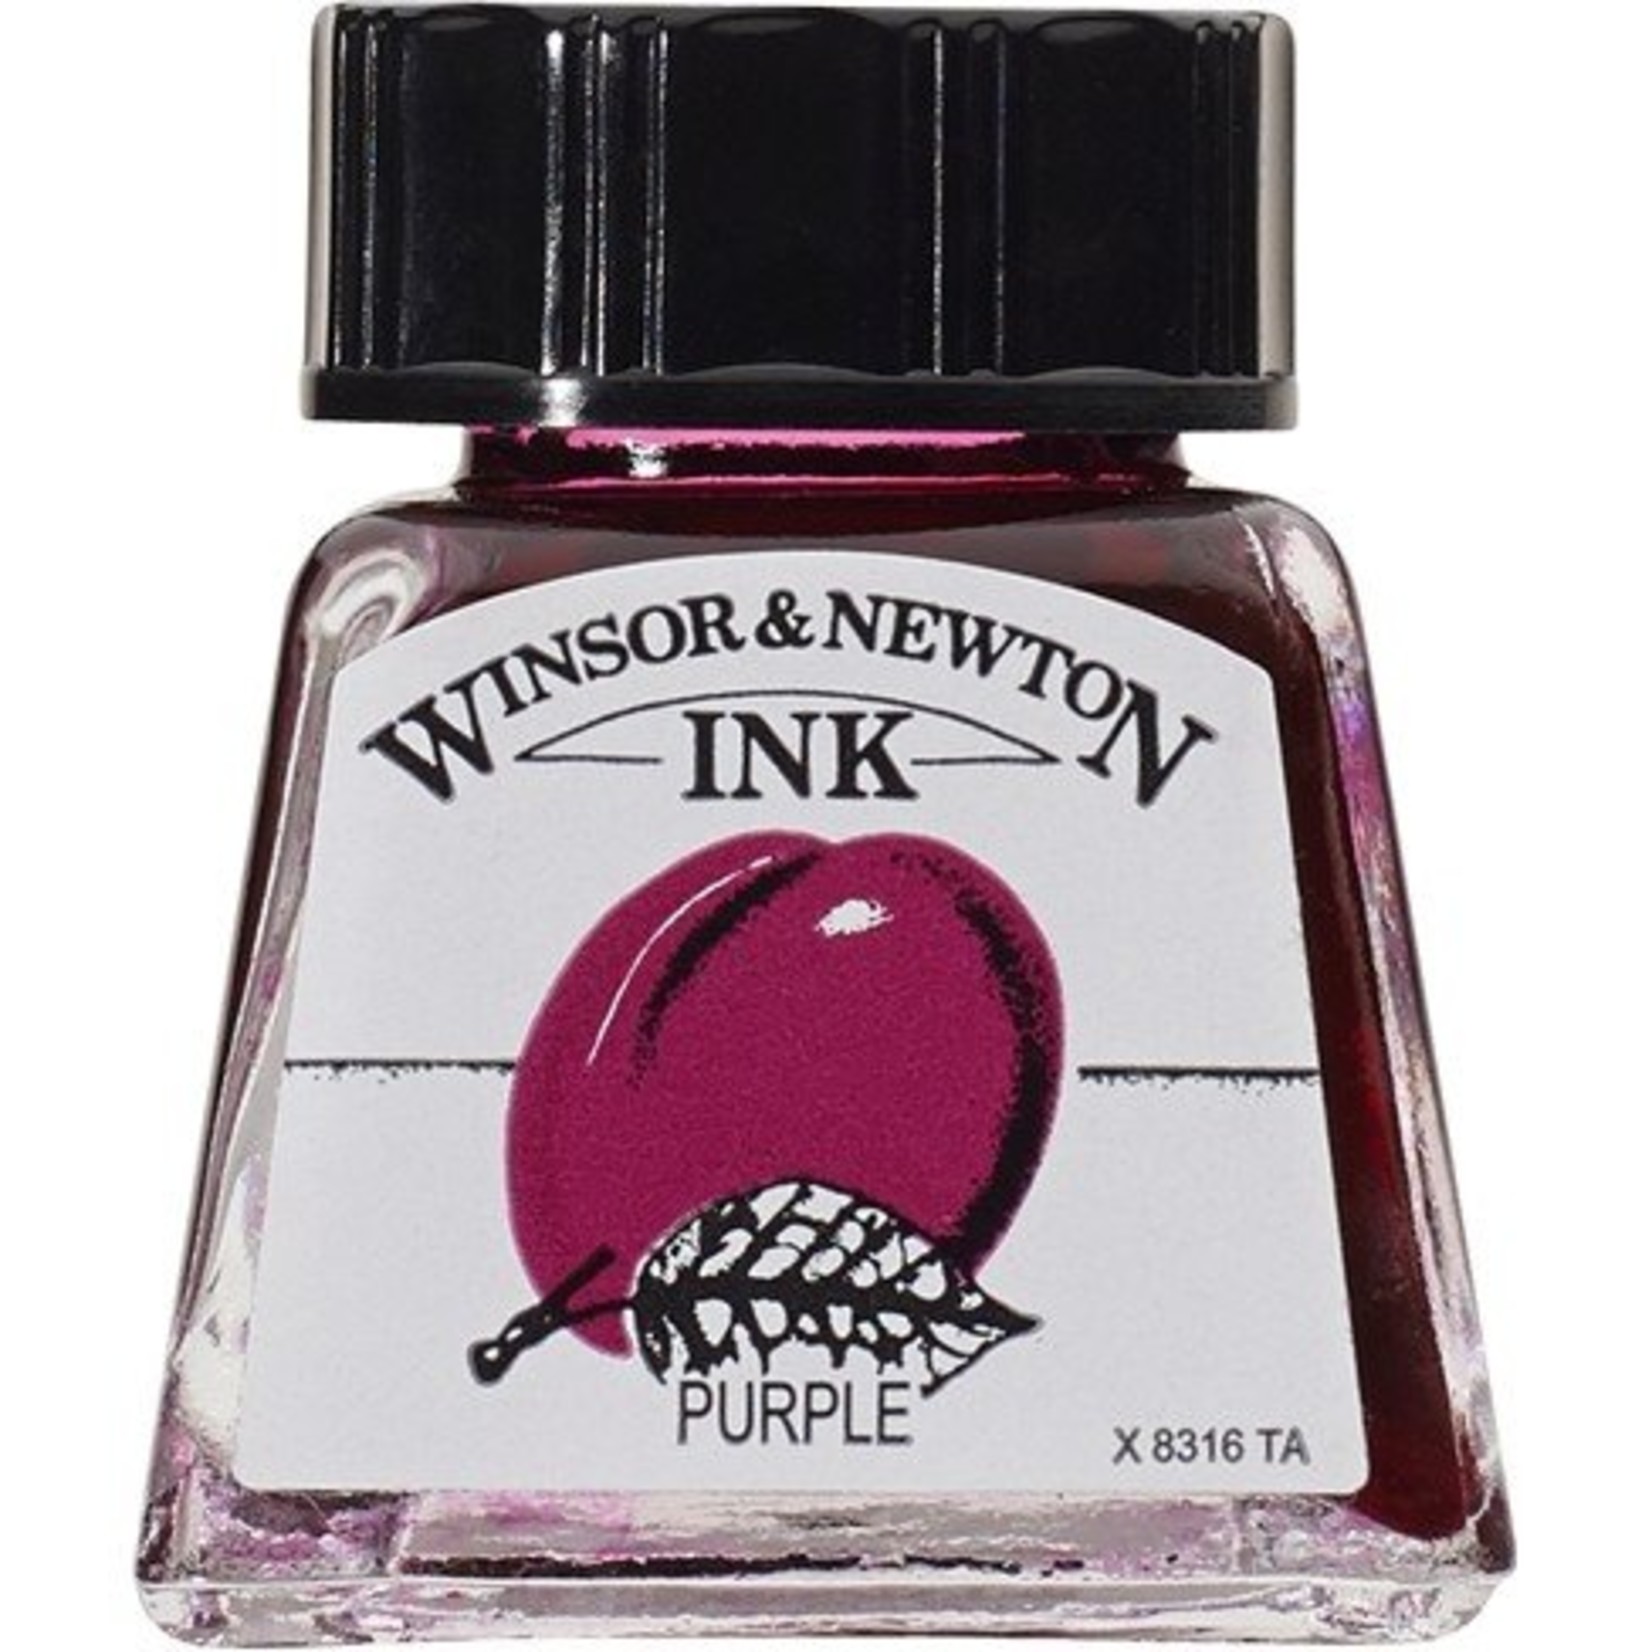 WINSOR NEWTON WINSOR & NEWTON DRAWING INK 14ML PURPLE